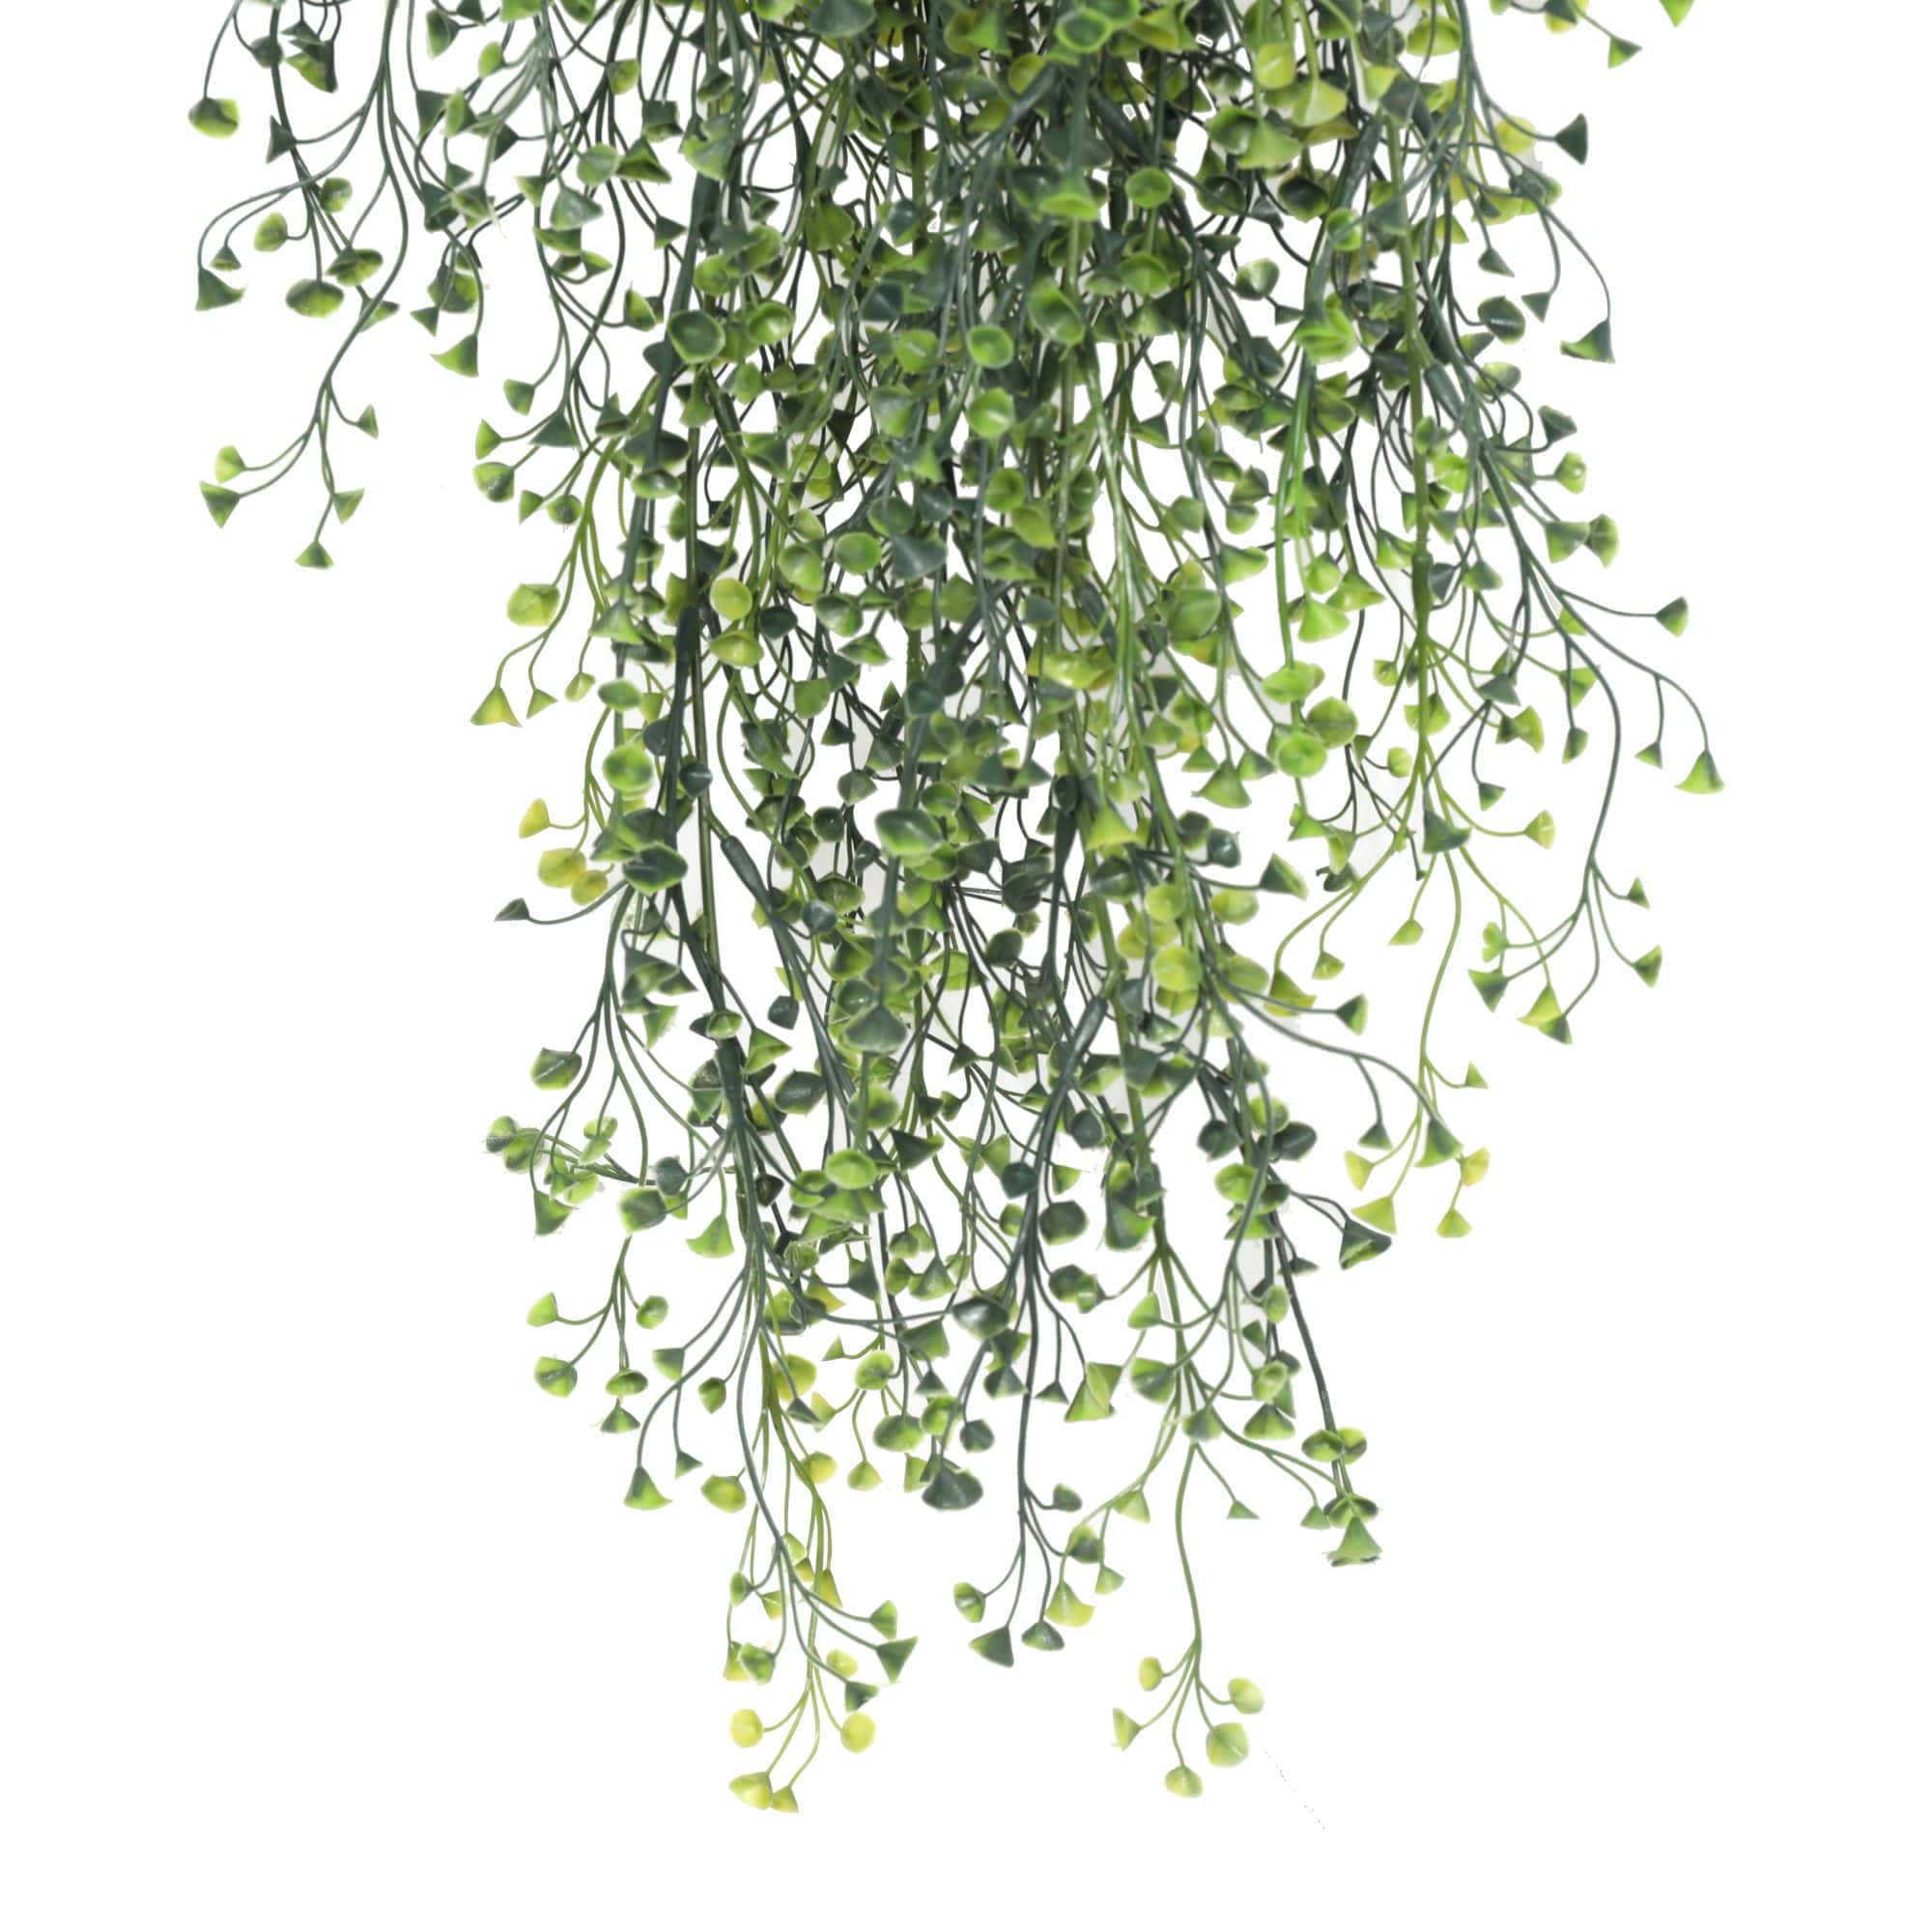 Artificial Hanging Pearls (Potted) 56cm UV Resistant - Designer Vertical Gardens hanging fern